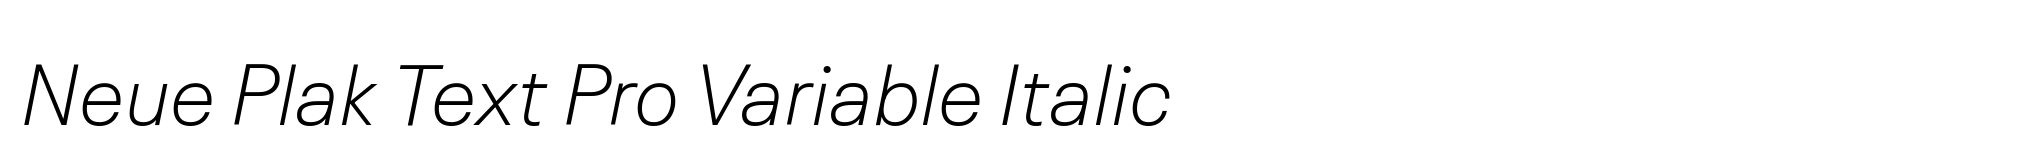 Neue Plak Text Pro Variable Italic image